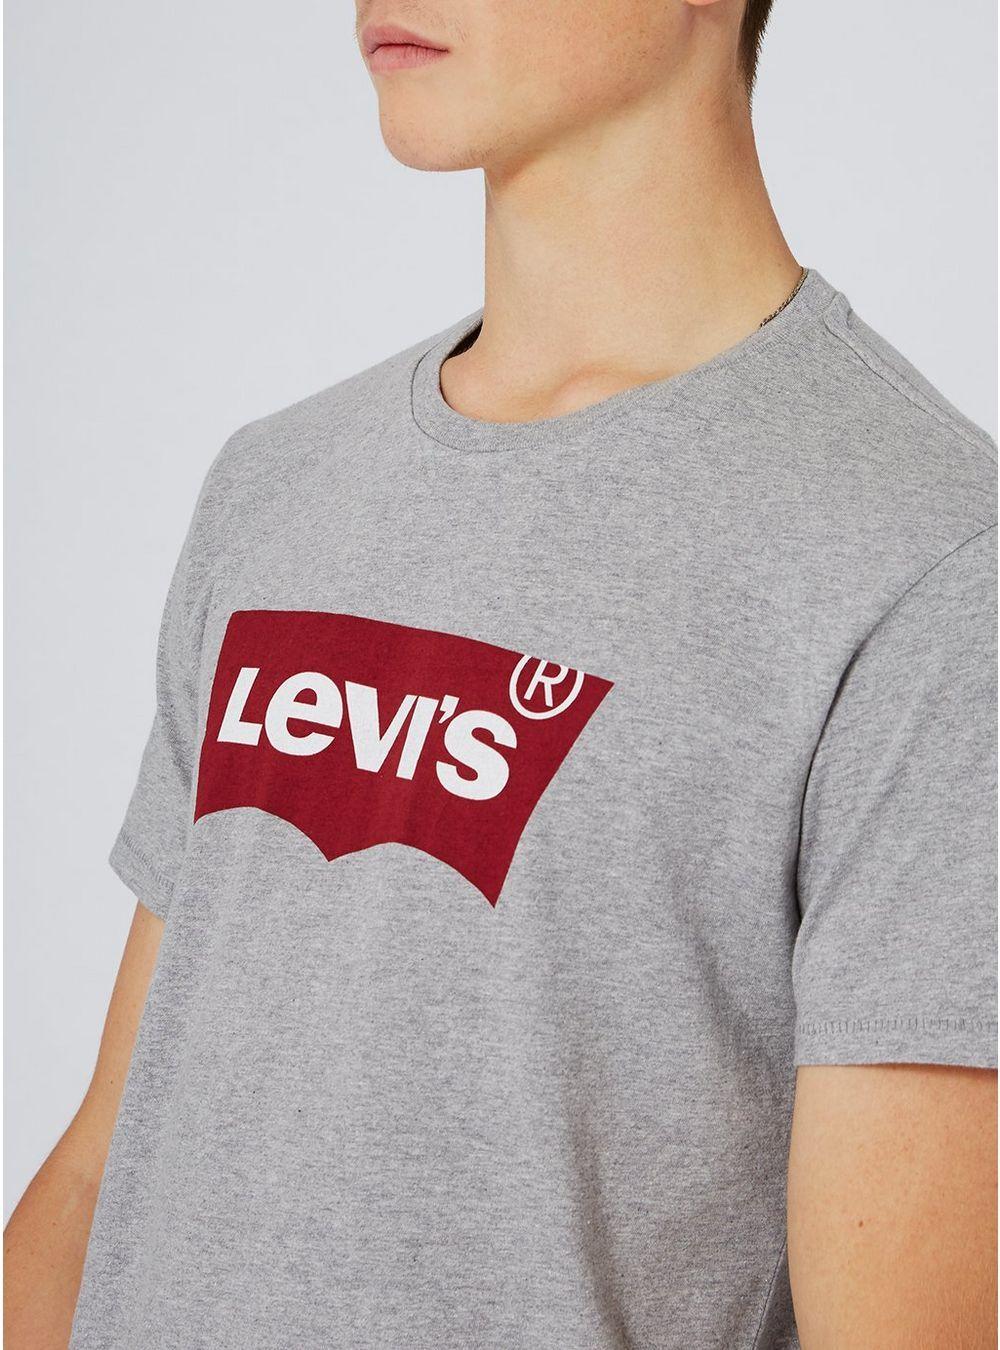 Light Grey Logo - LEVI'S Light Grey Logo T-Shirt - TopMan Singapore